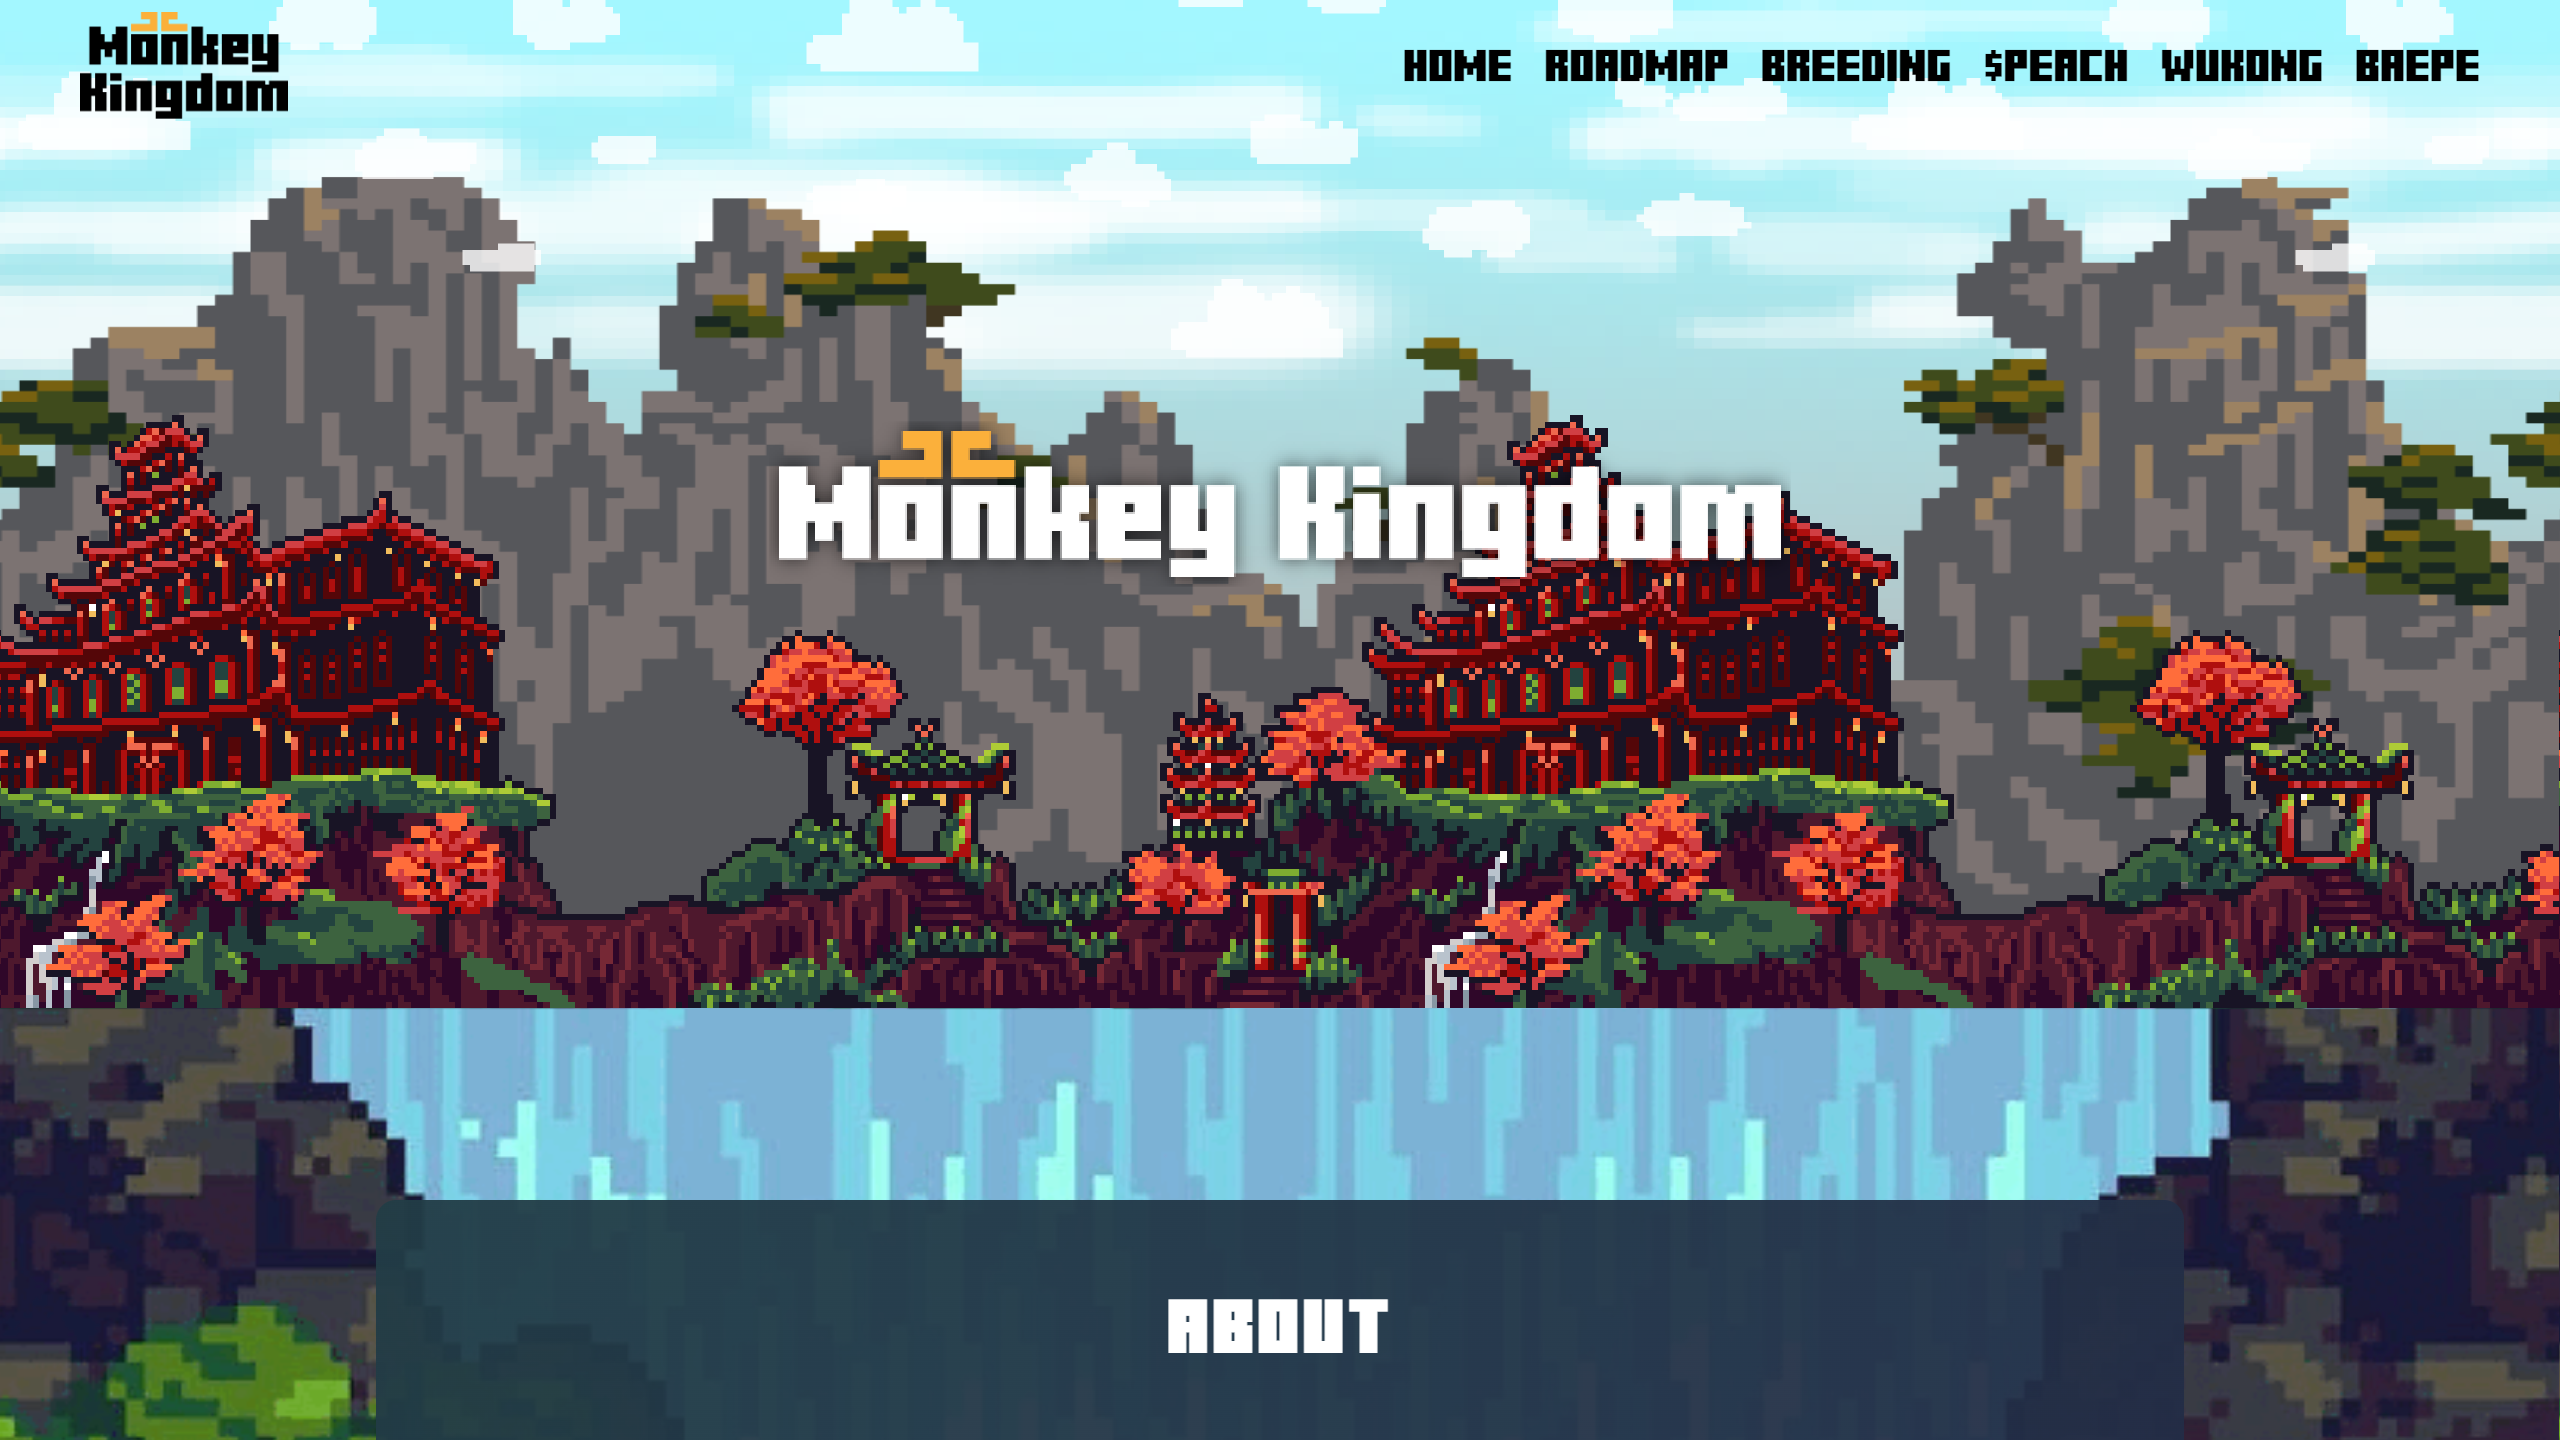 Monkey kingdom community animation